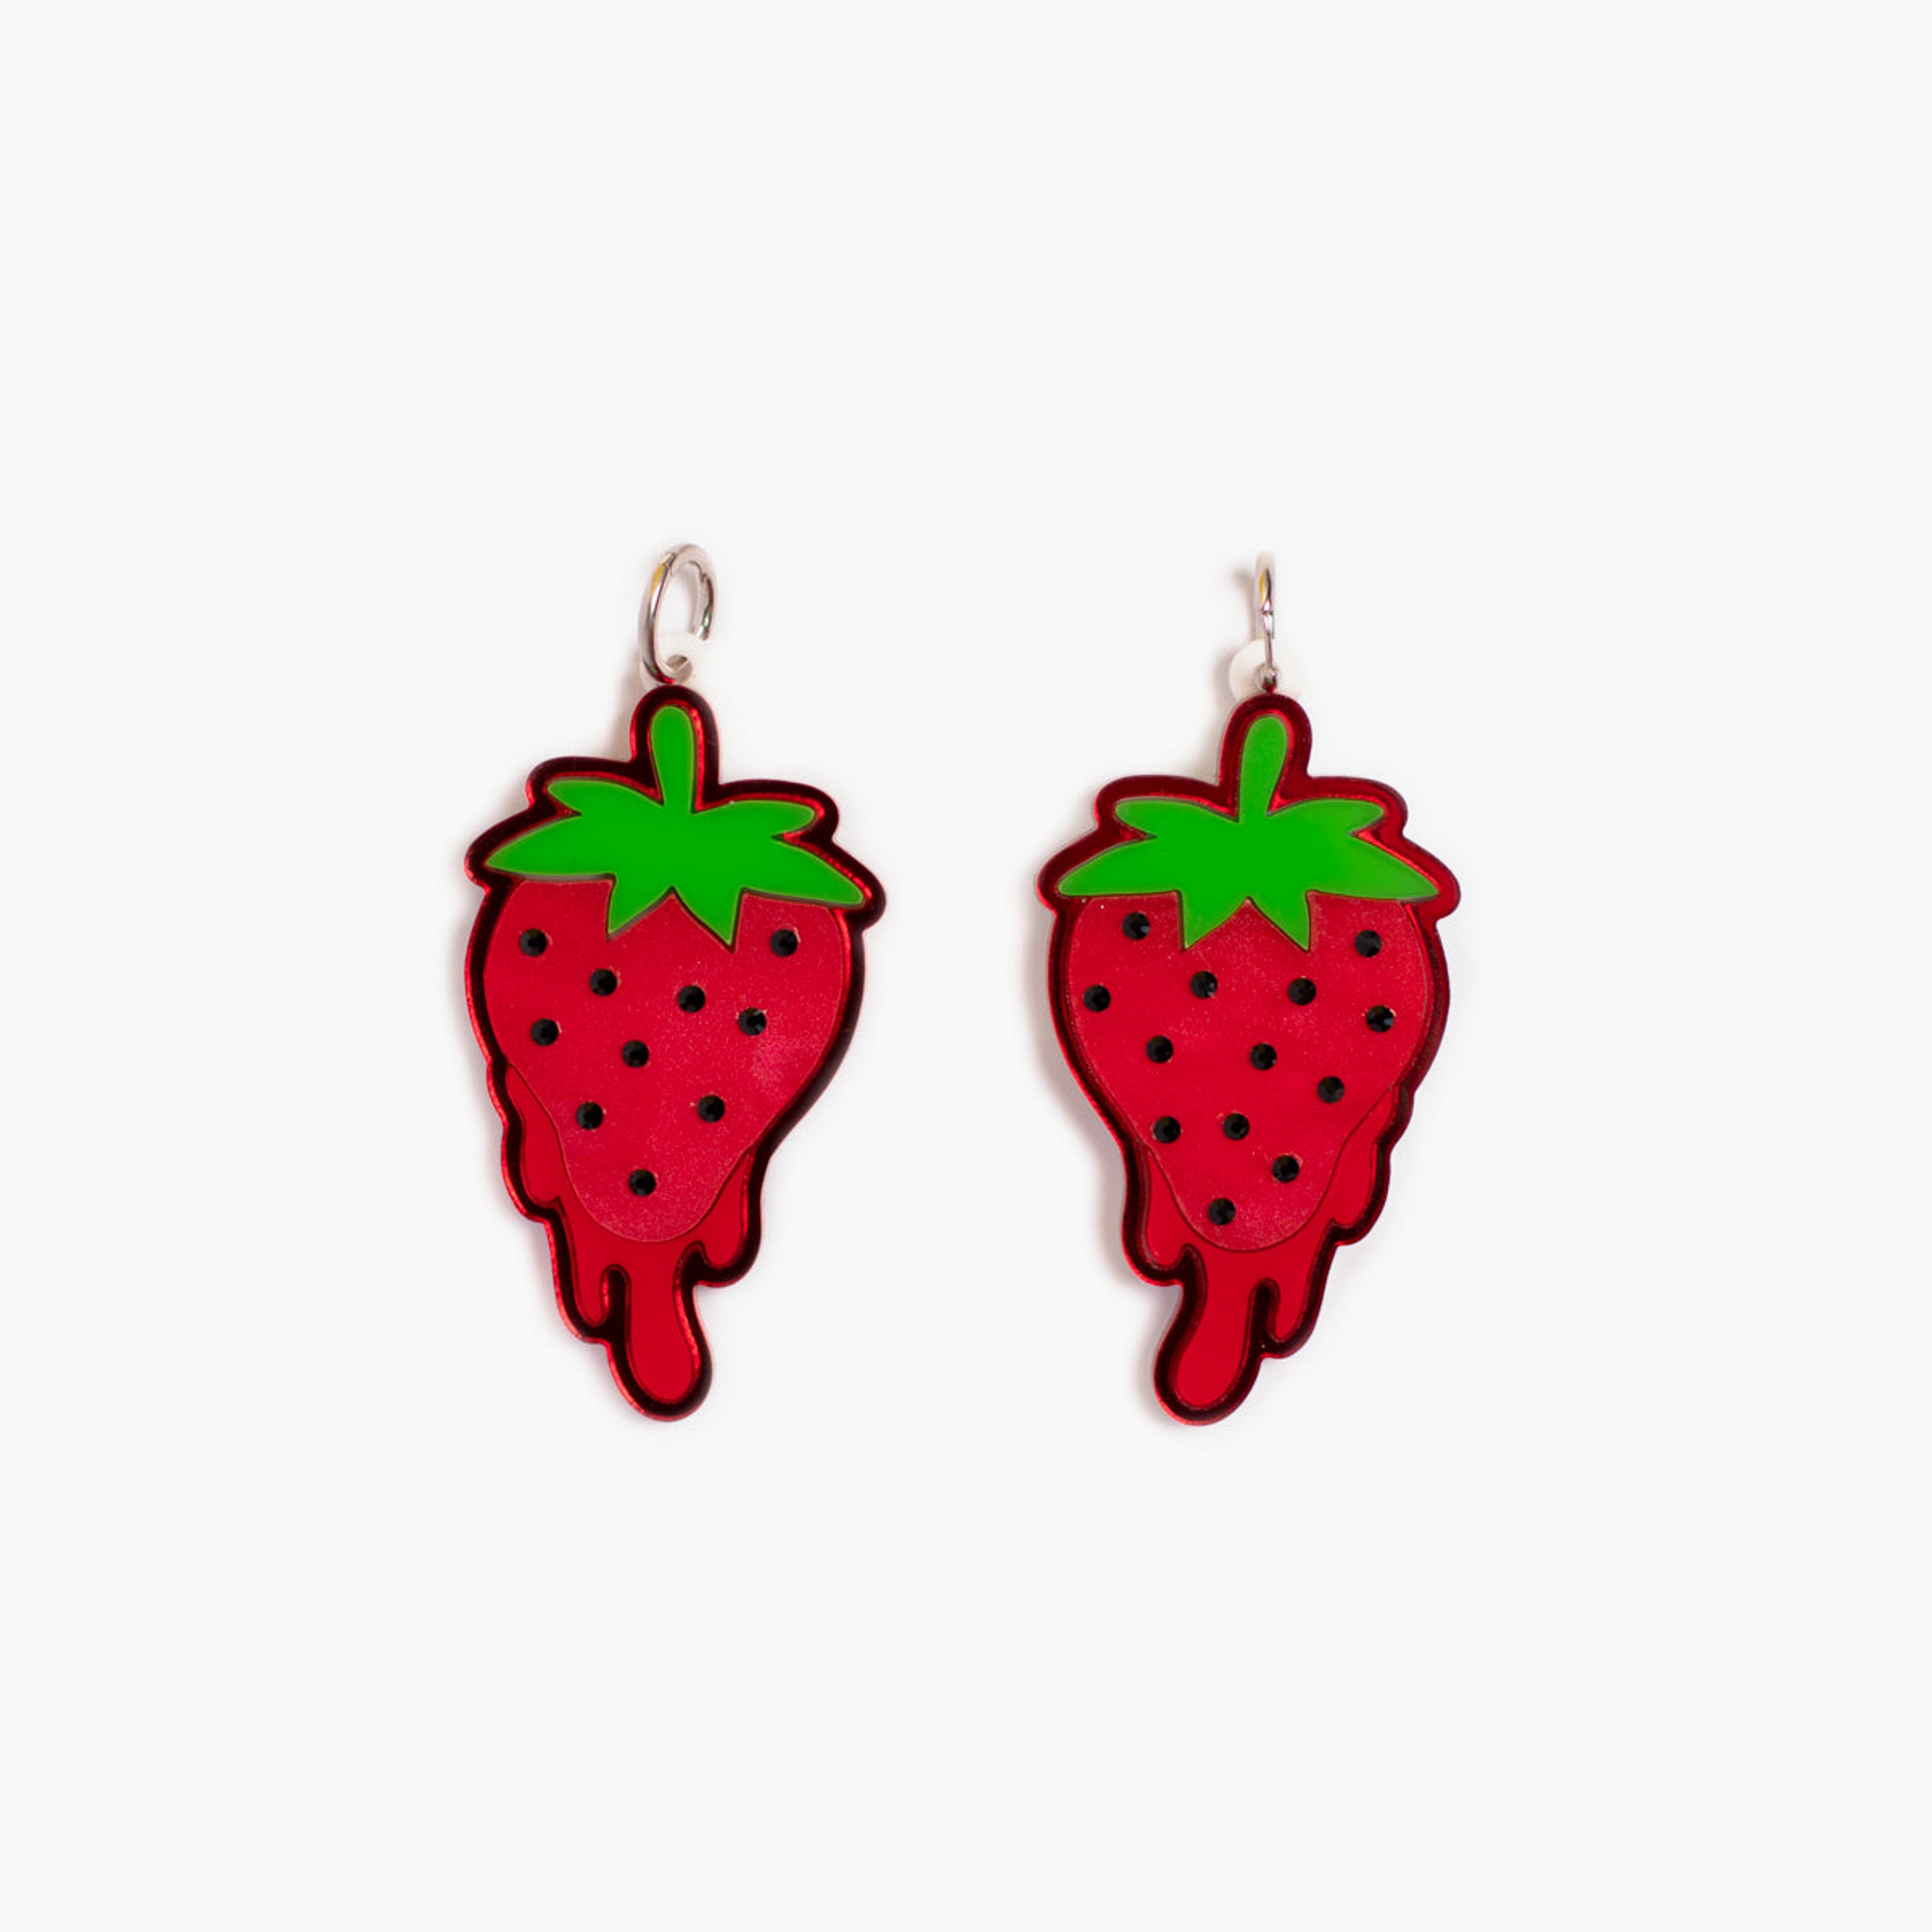 The Strawberry Earrings